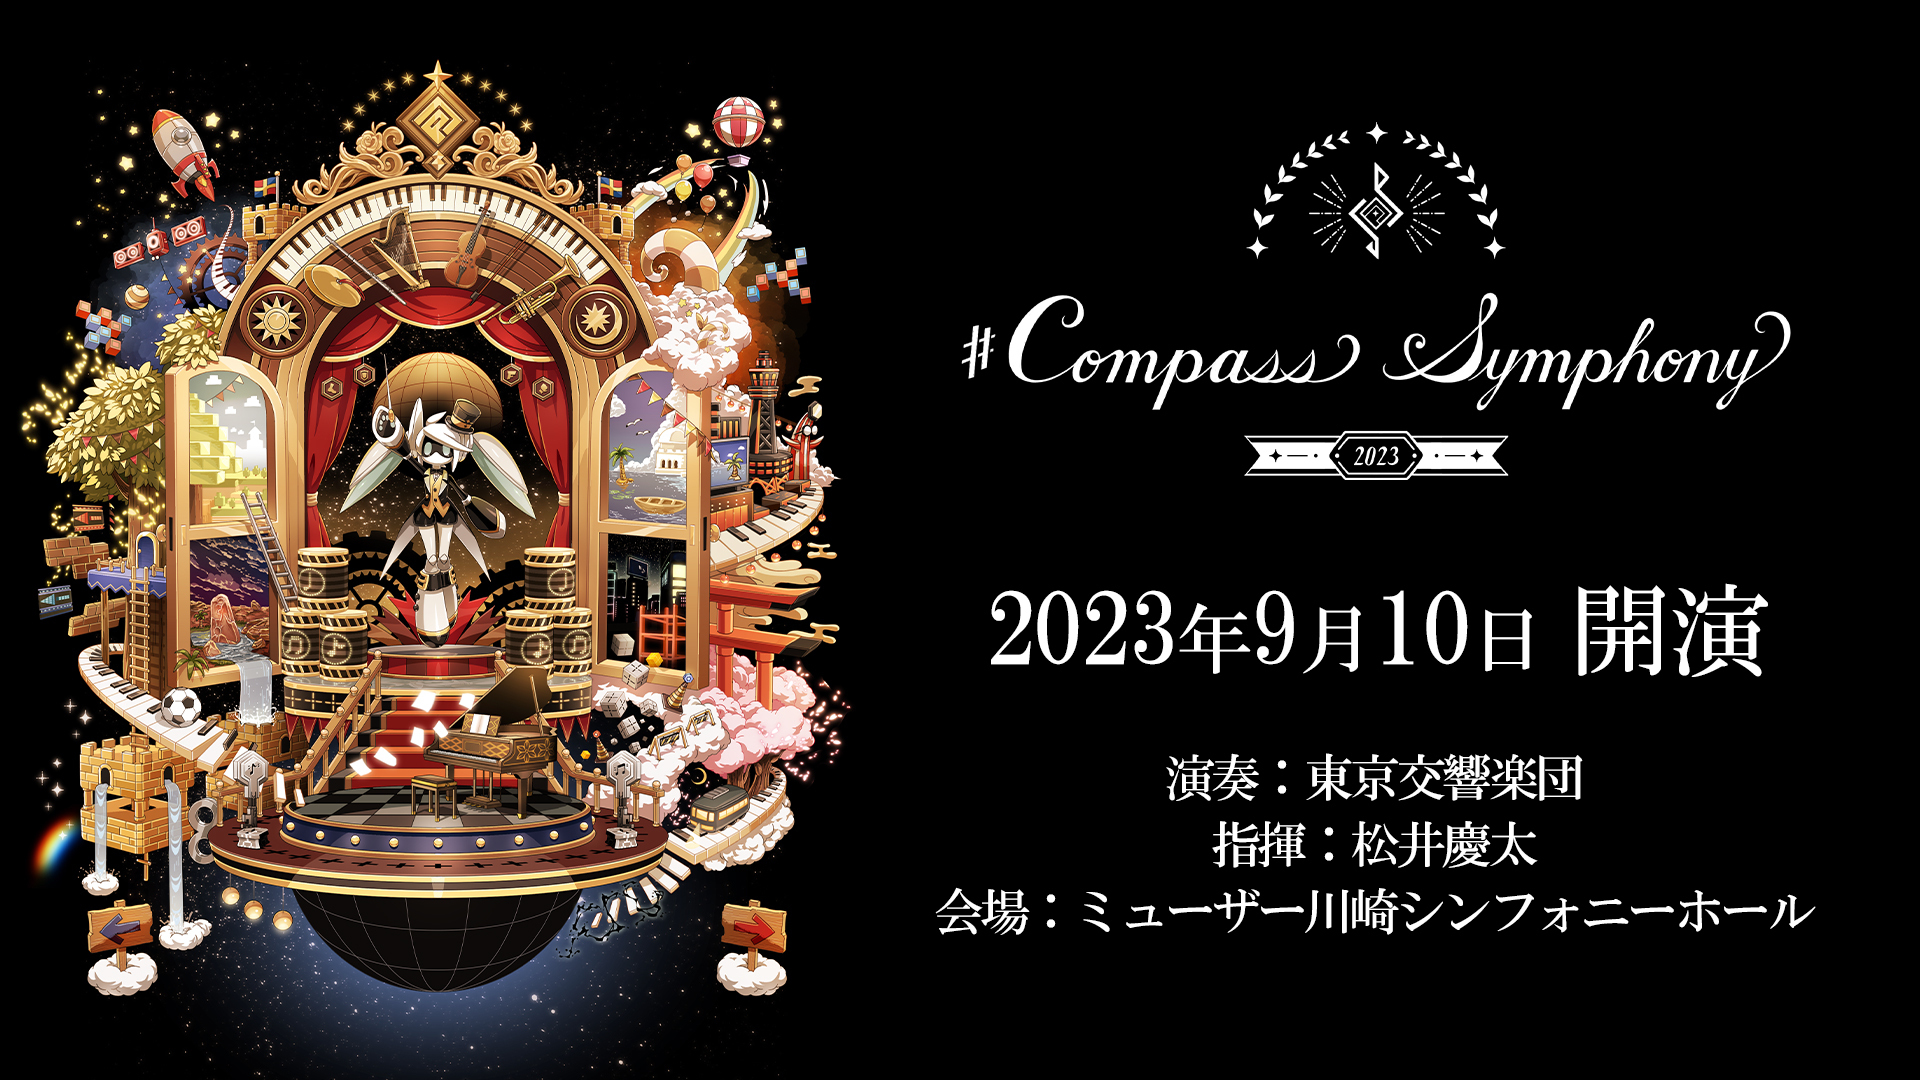 COMPASS SYMPHONY 2023 - ドワンゴチケット